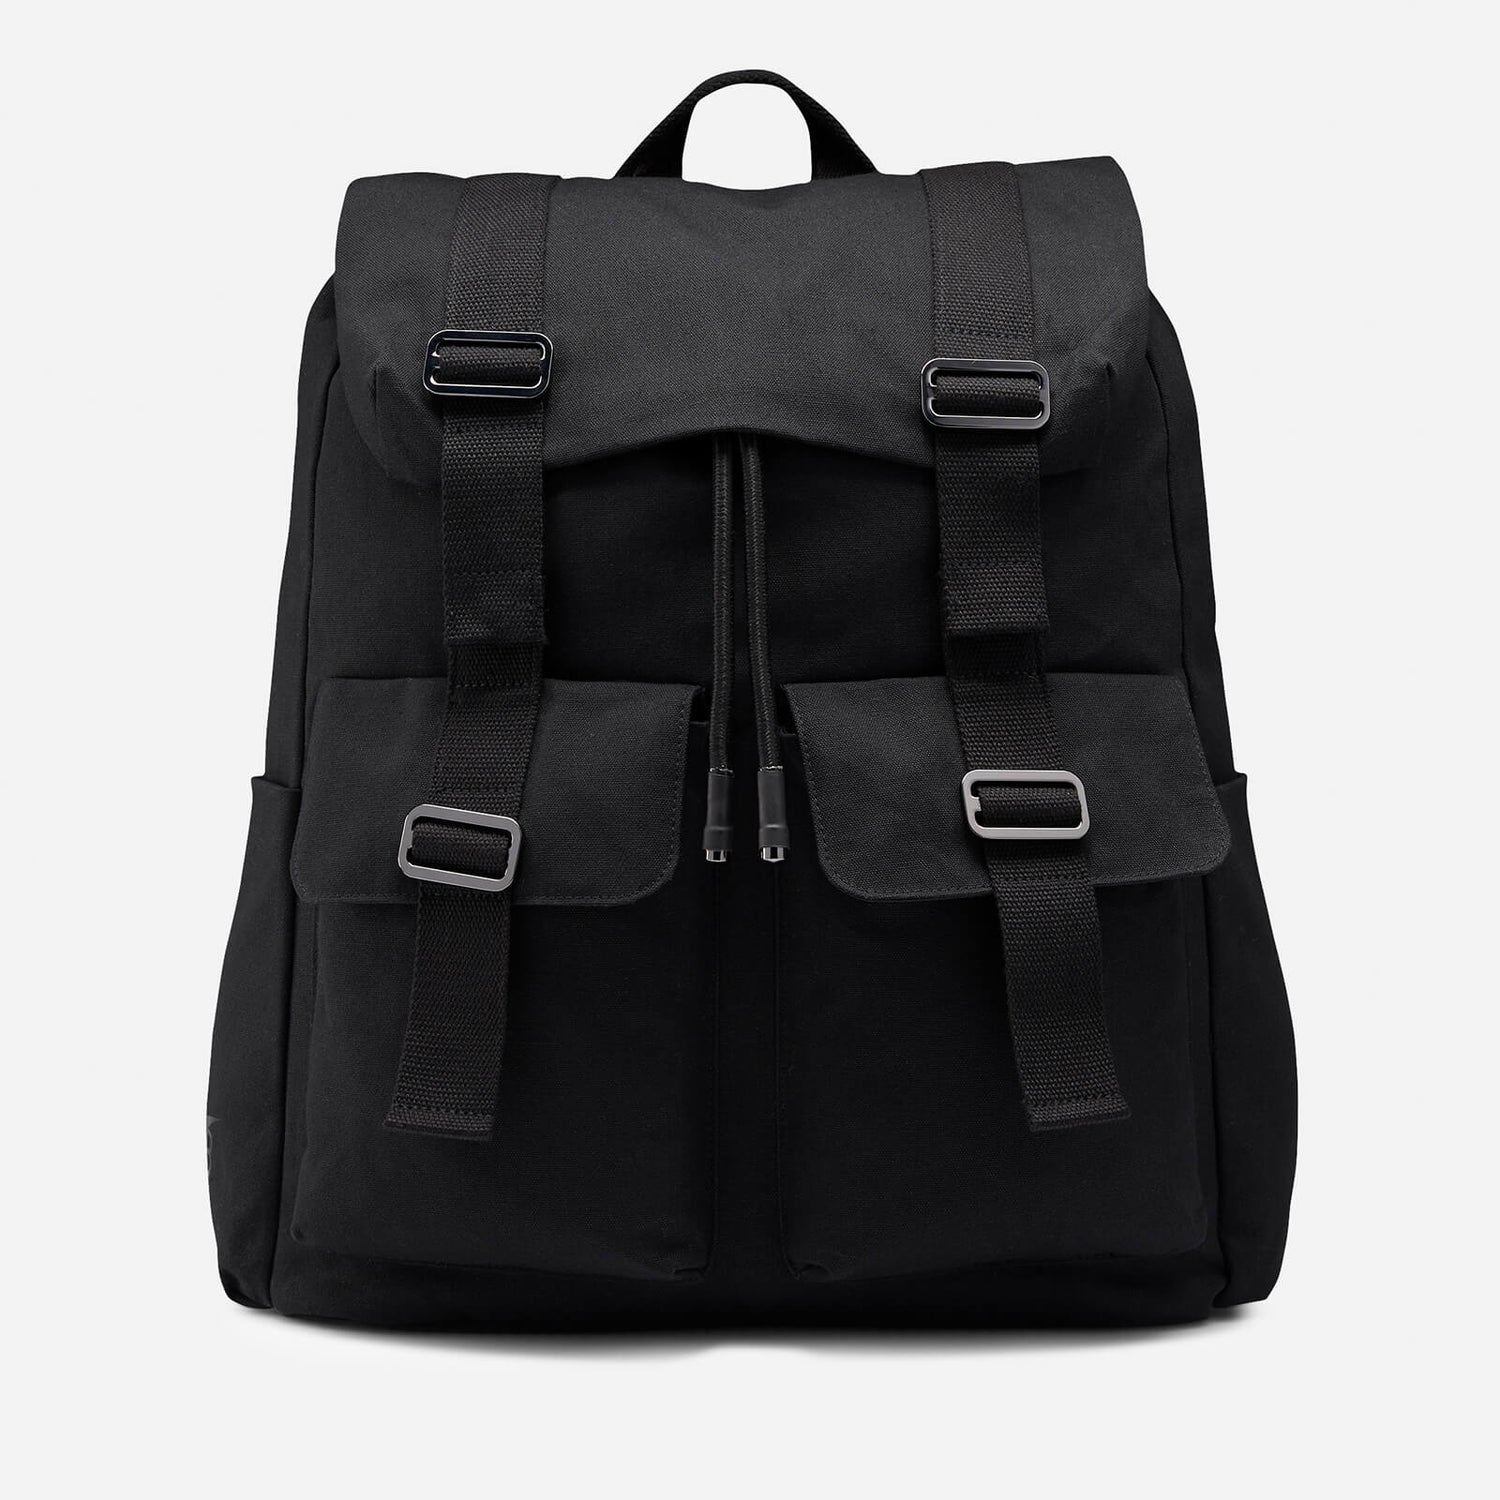 Reebok X Victoria Beckham Women's Fashion Backpack - Black